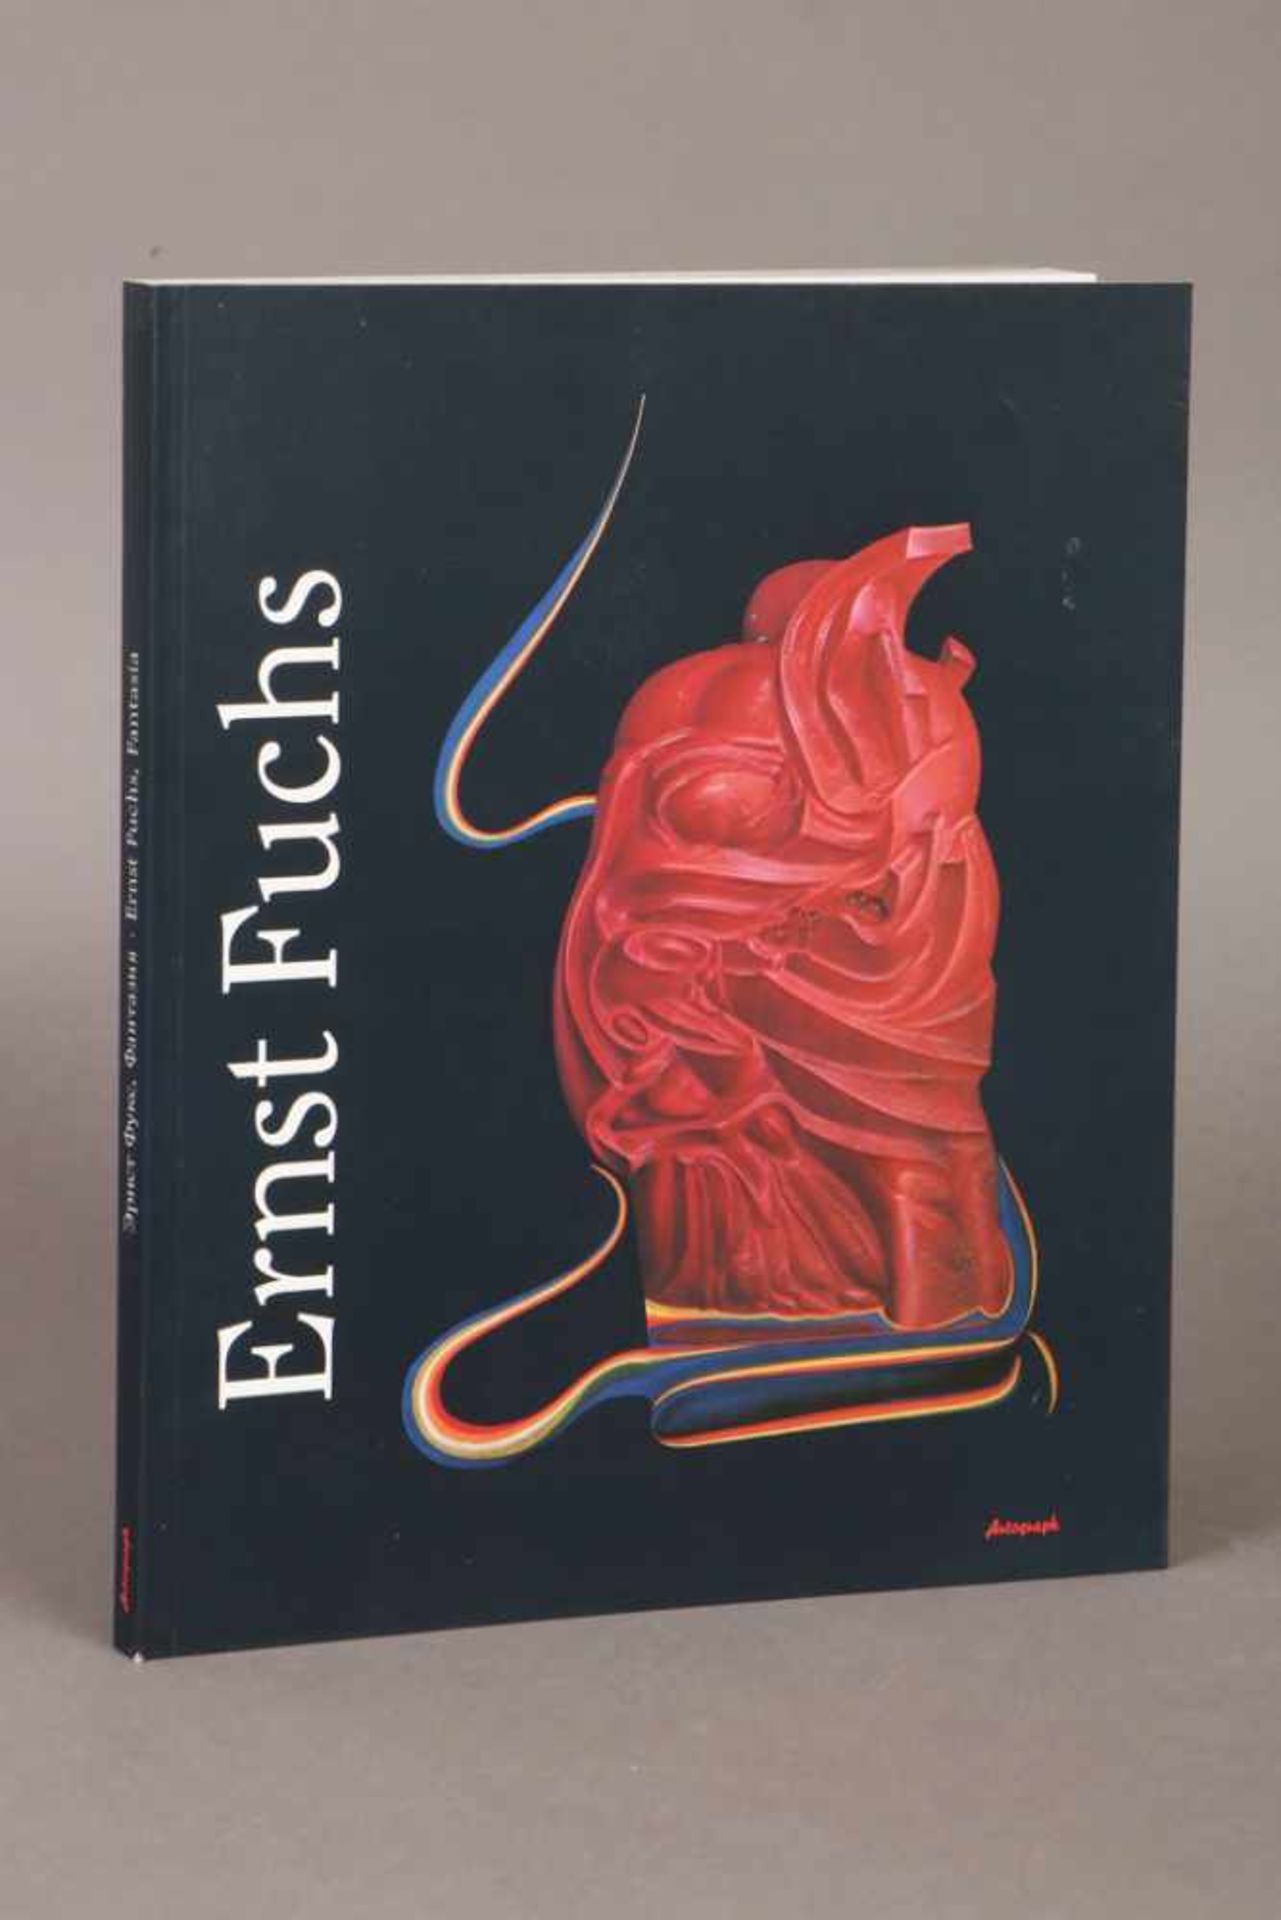 Buch, Ernst Fuchs, ¨Fantasia¨ handsigniertes Exemplar, dat. 1999, Artograph Verlag München, Hrsg.